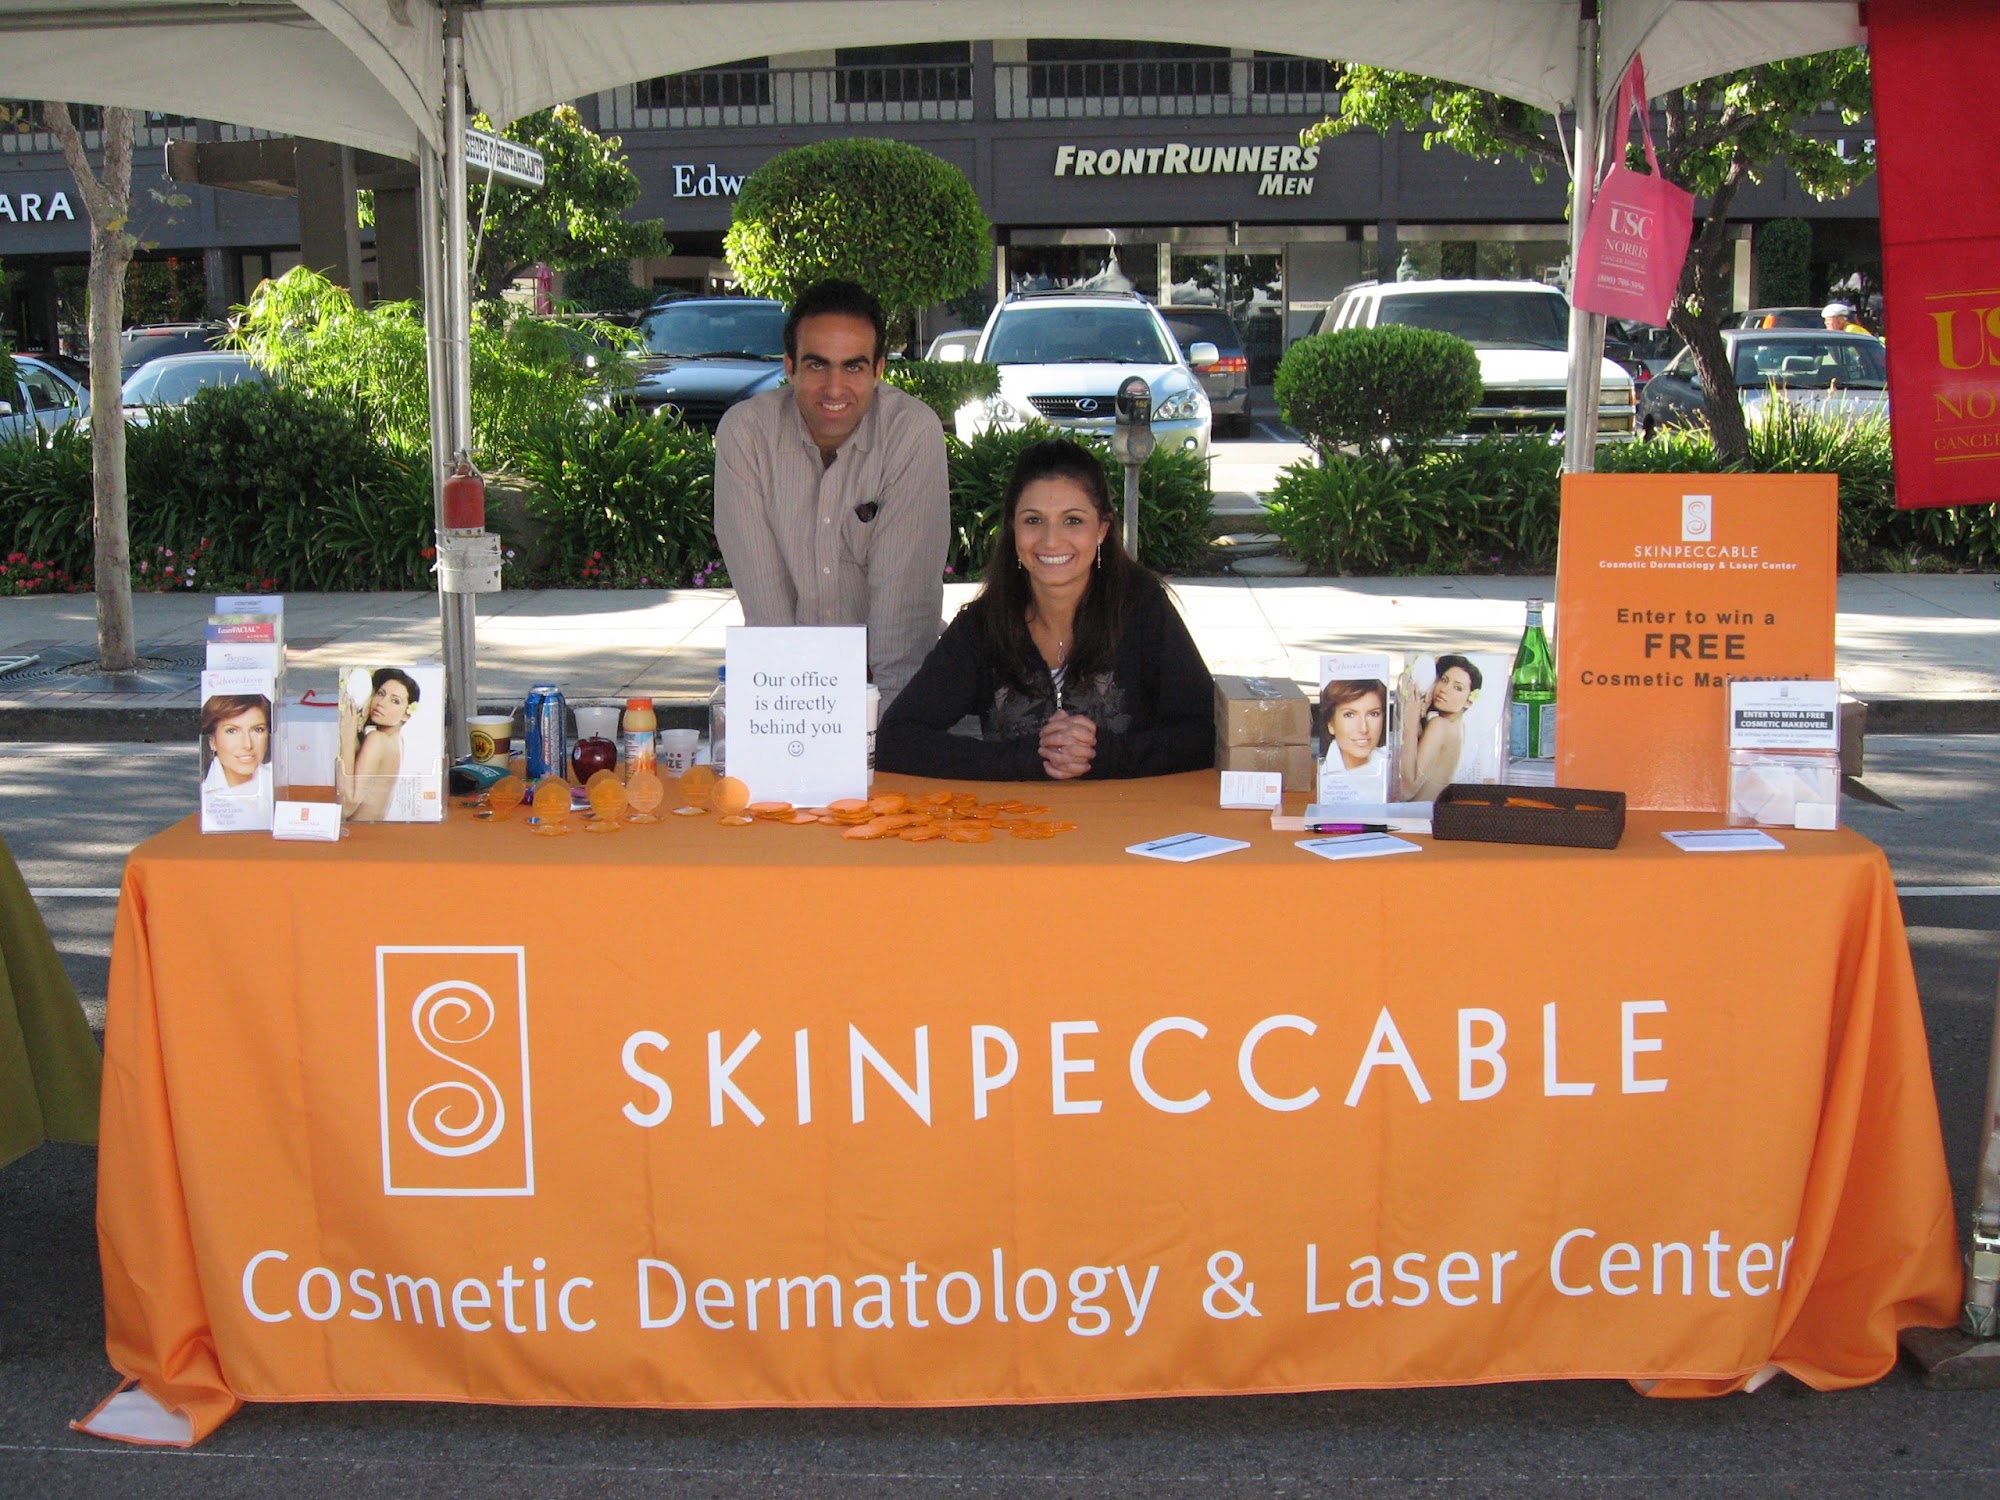 Skinpeccable Dermatology & Cosmetic Laser Center